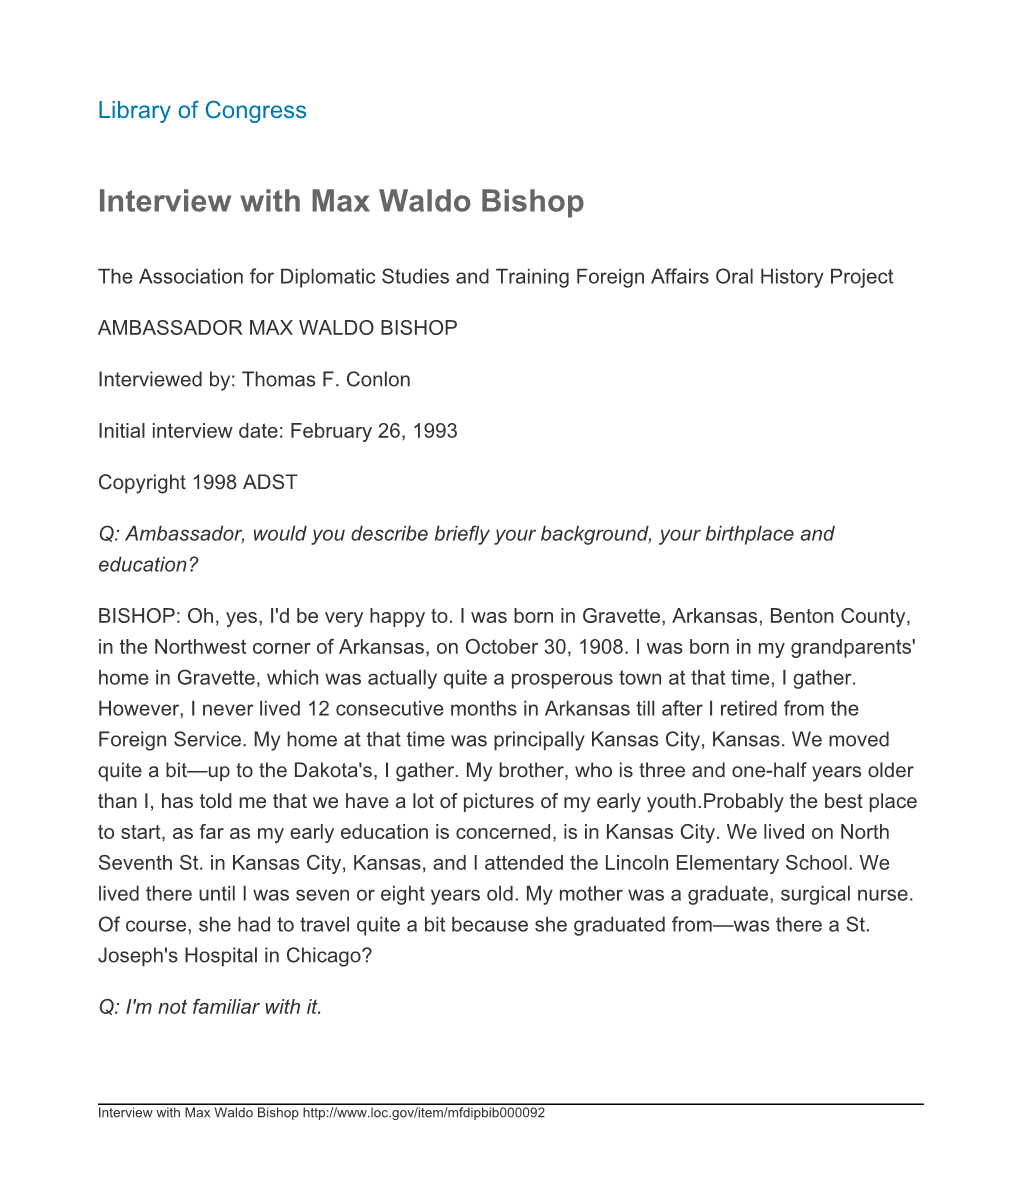 Interview with Max Waldo Bishop